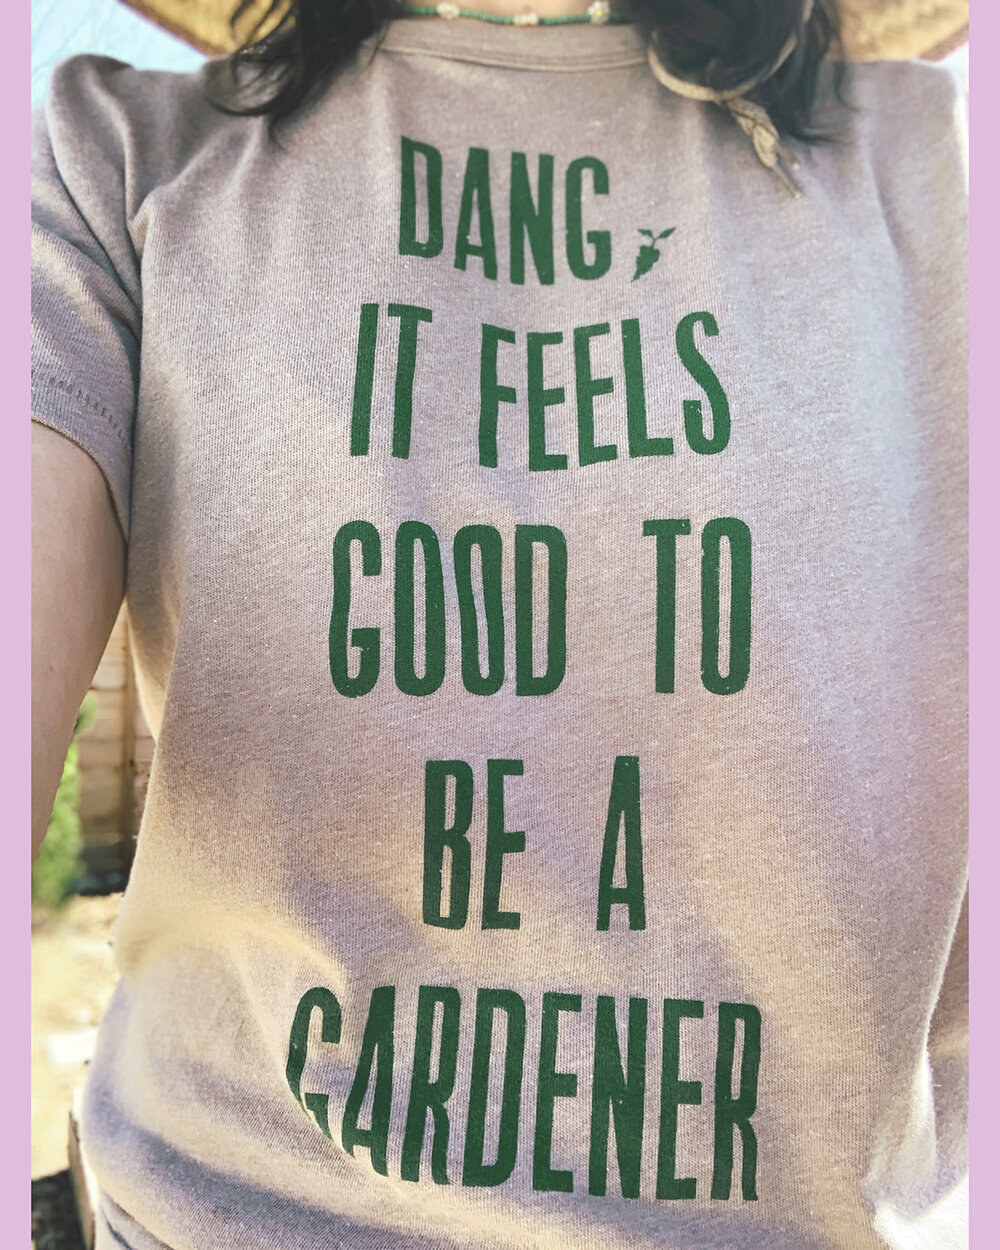 Tee-shirt jardinier jardinage tee shirt